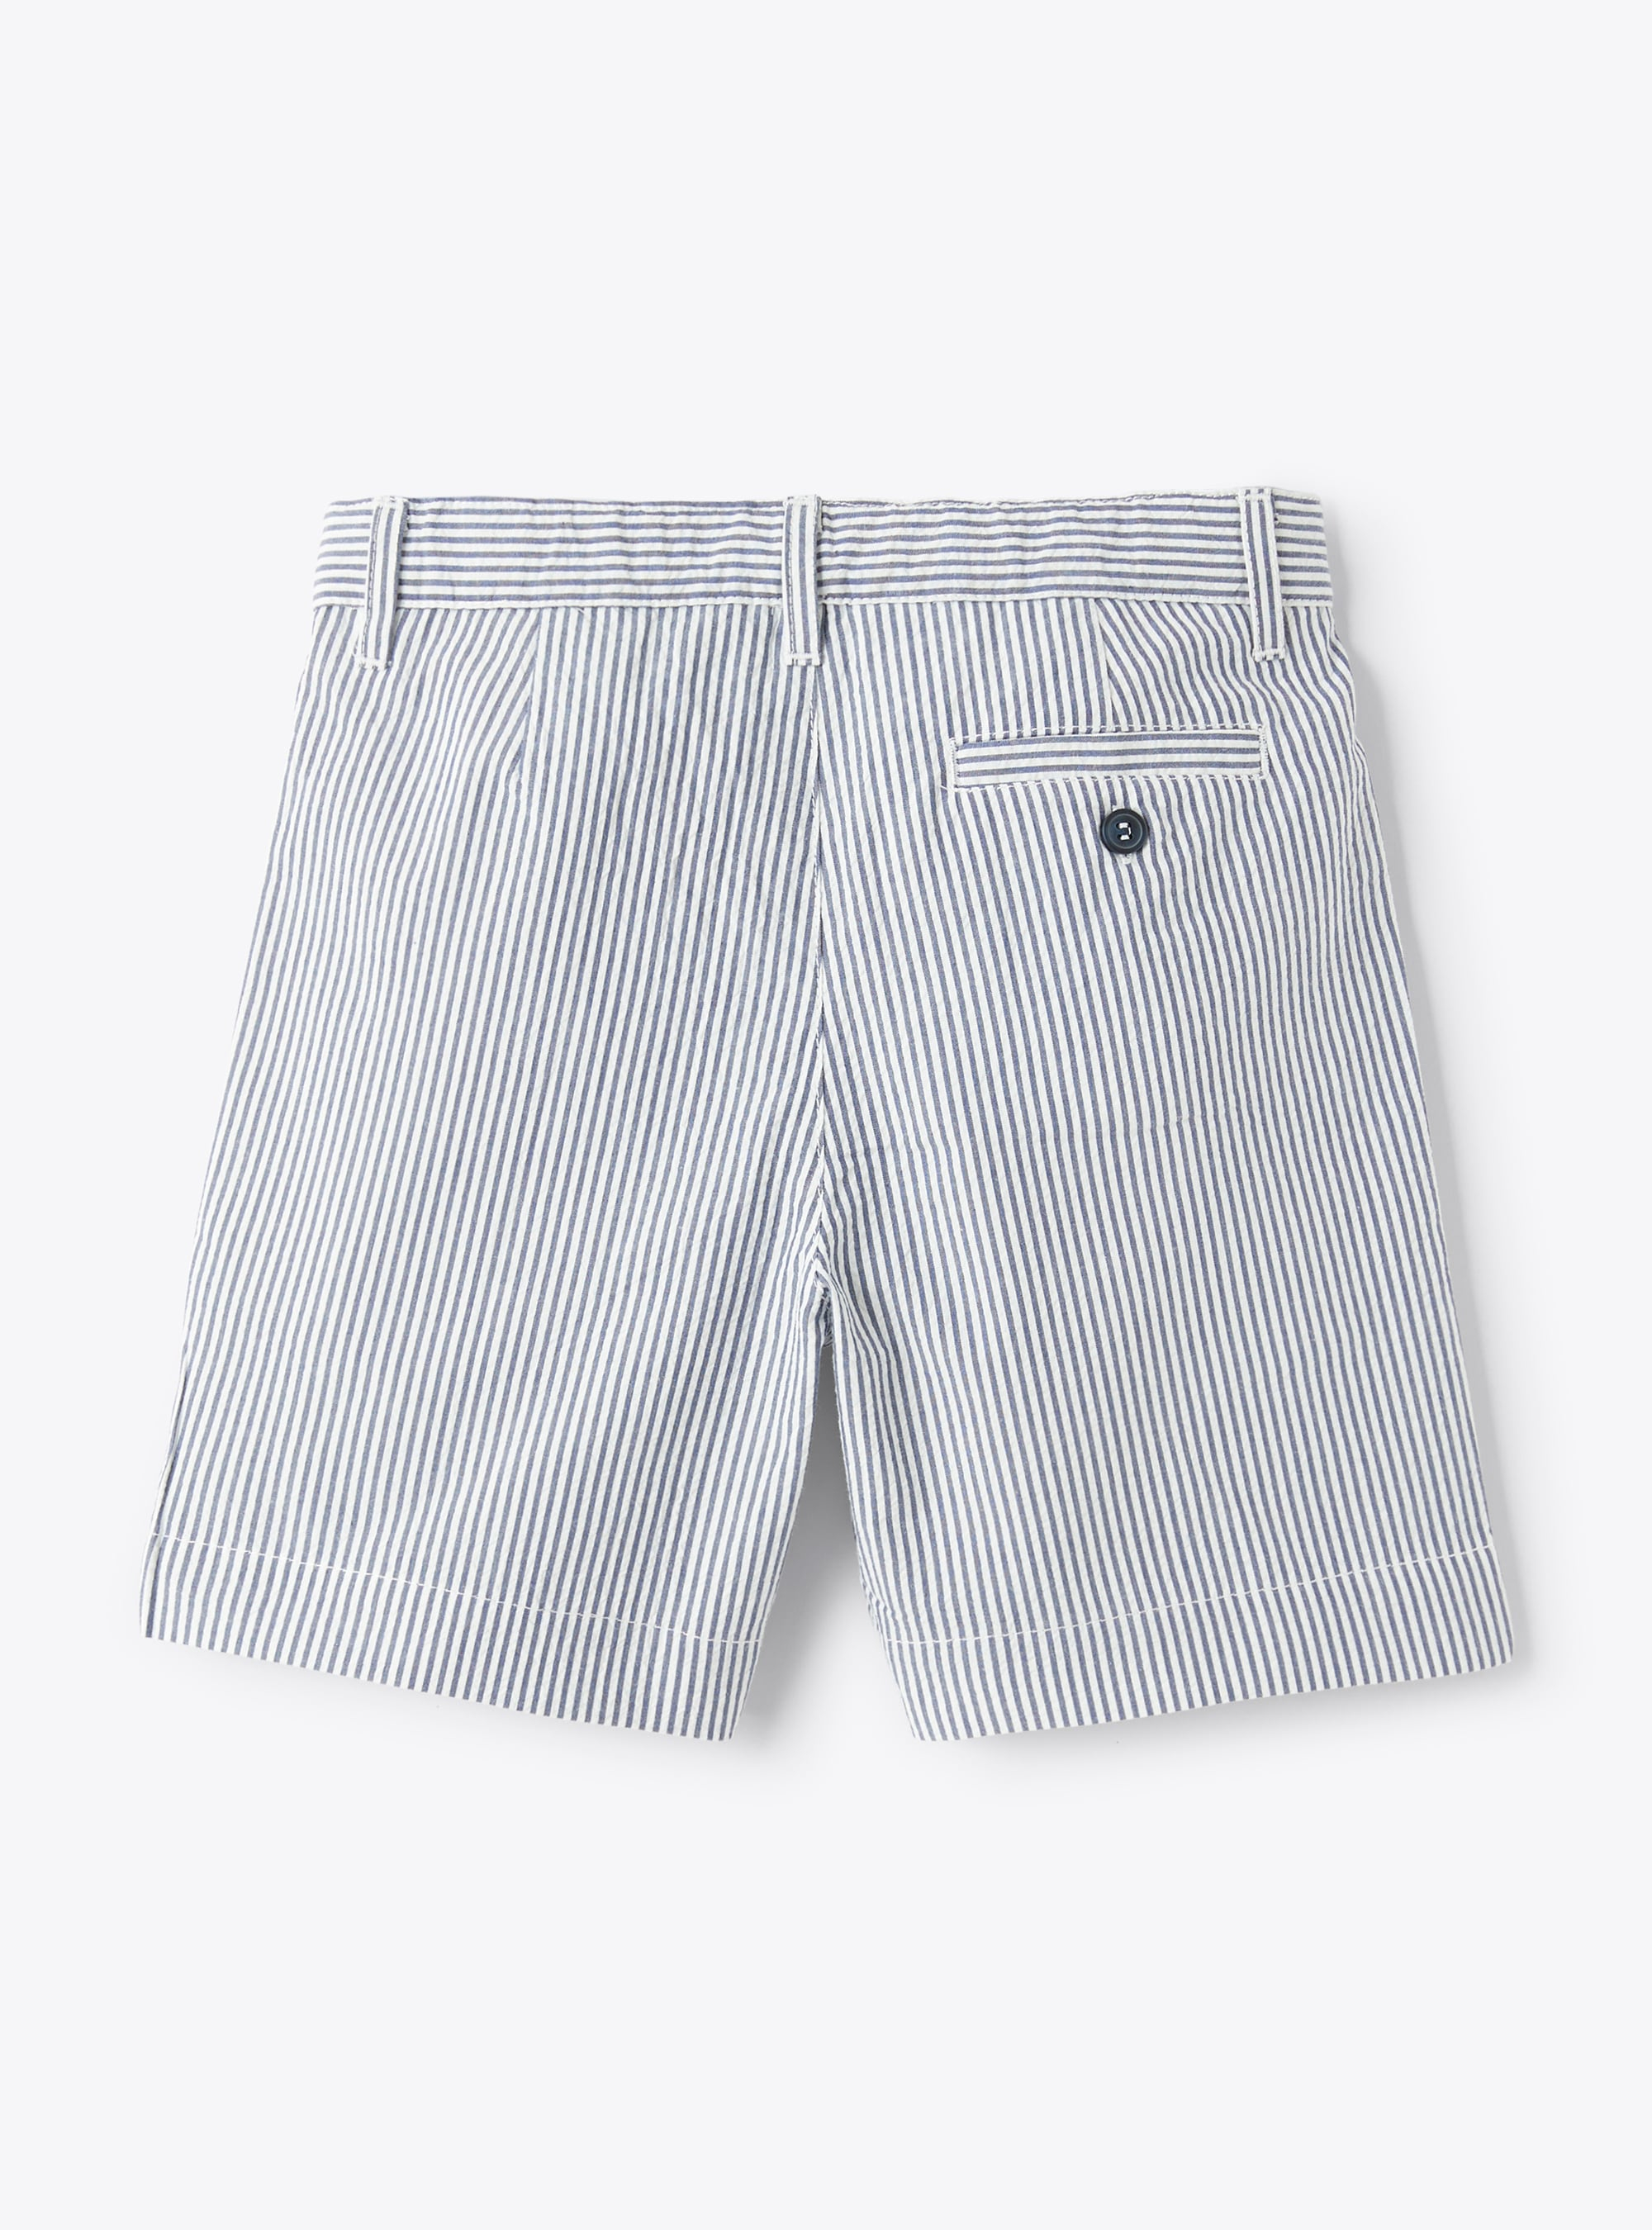 Bermuda shorts in blue-&-white striped seersucker - Blue | Il Gufo